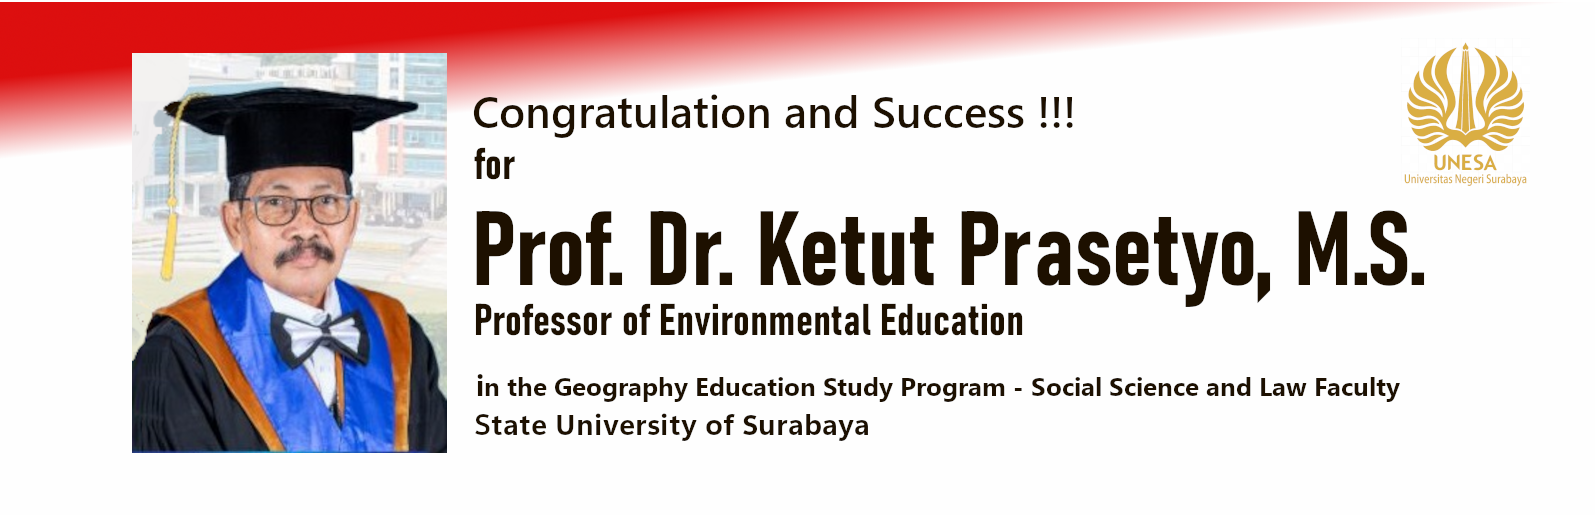 Prof. Dr. Ketut Prasetyo, M.S.